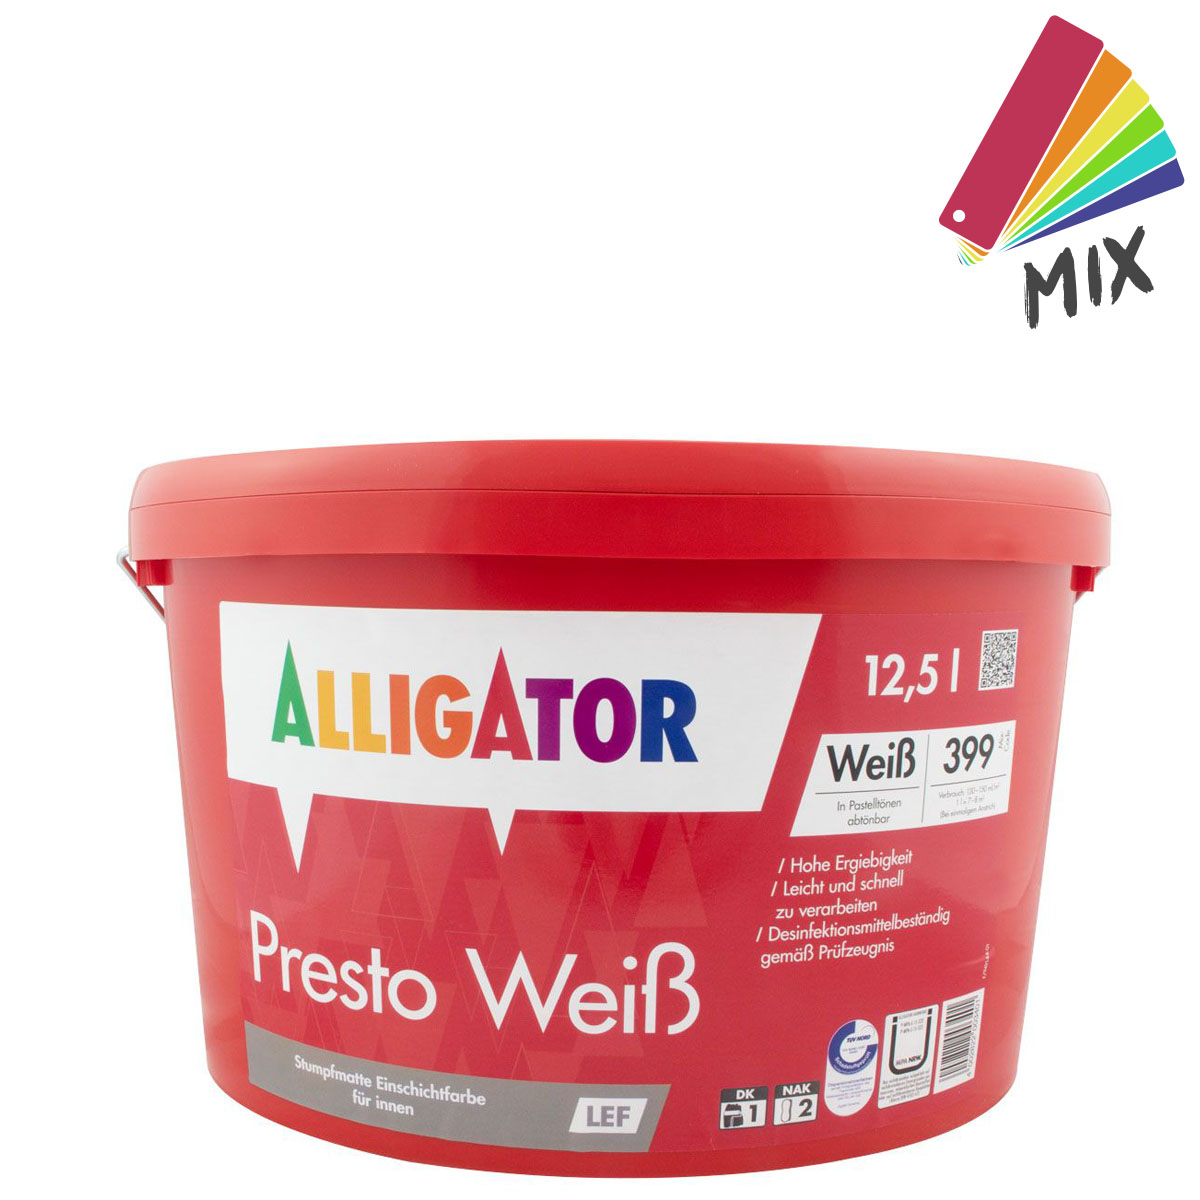 Alligator Presto Weiß LEF 12,5L MIX PG A ,Dispersions-Innenfarbe